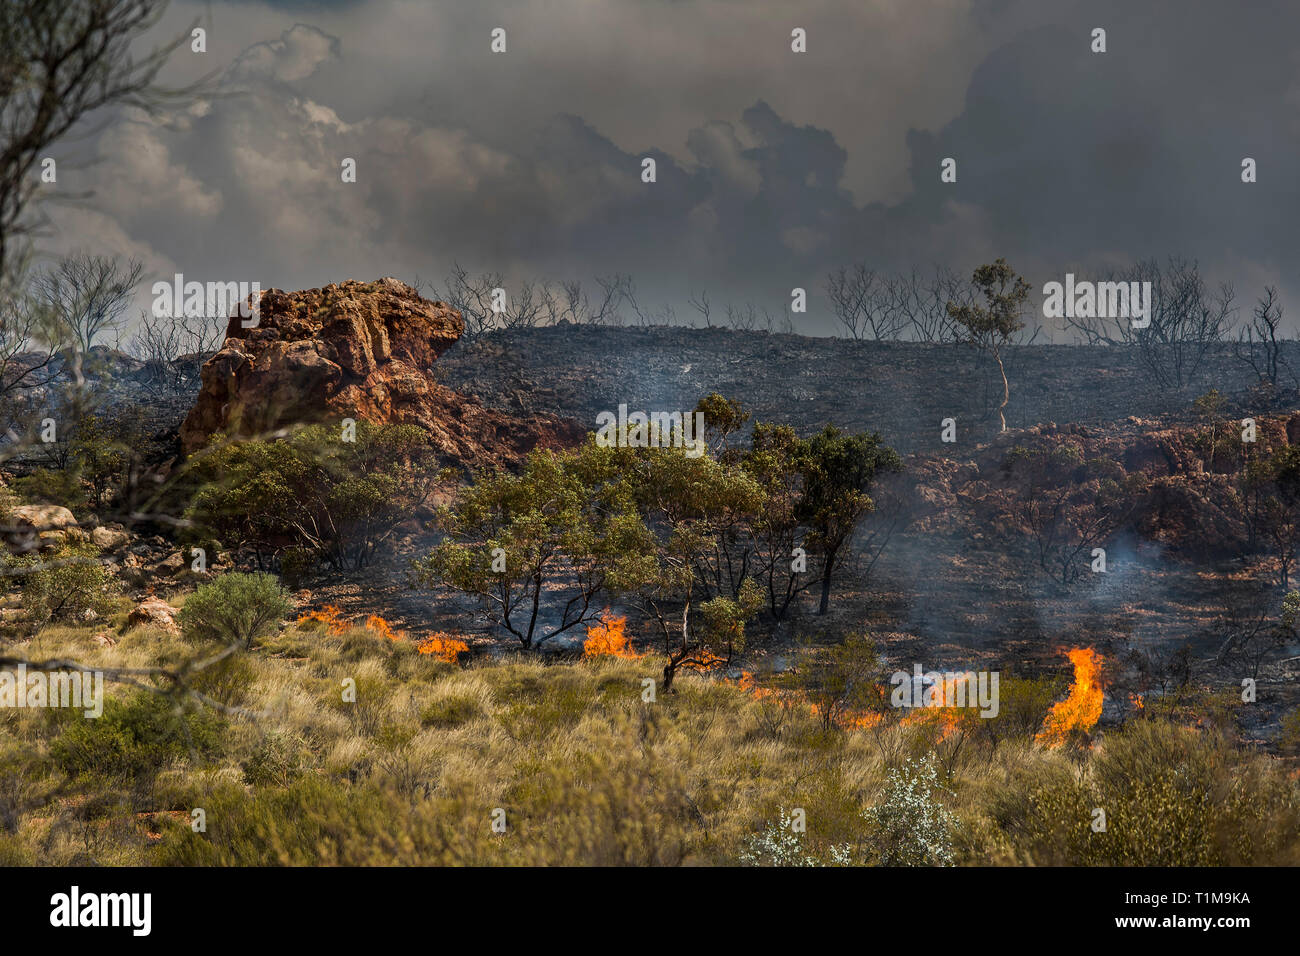 Wildfire brennen, Osten McDonnell Ranges, Alice Springs, Northern Territory, Australien Stockfoto